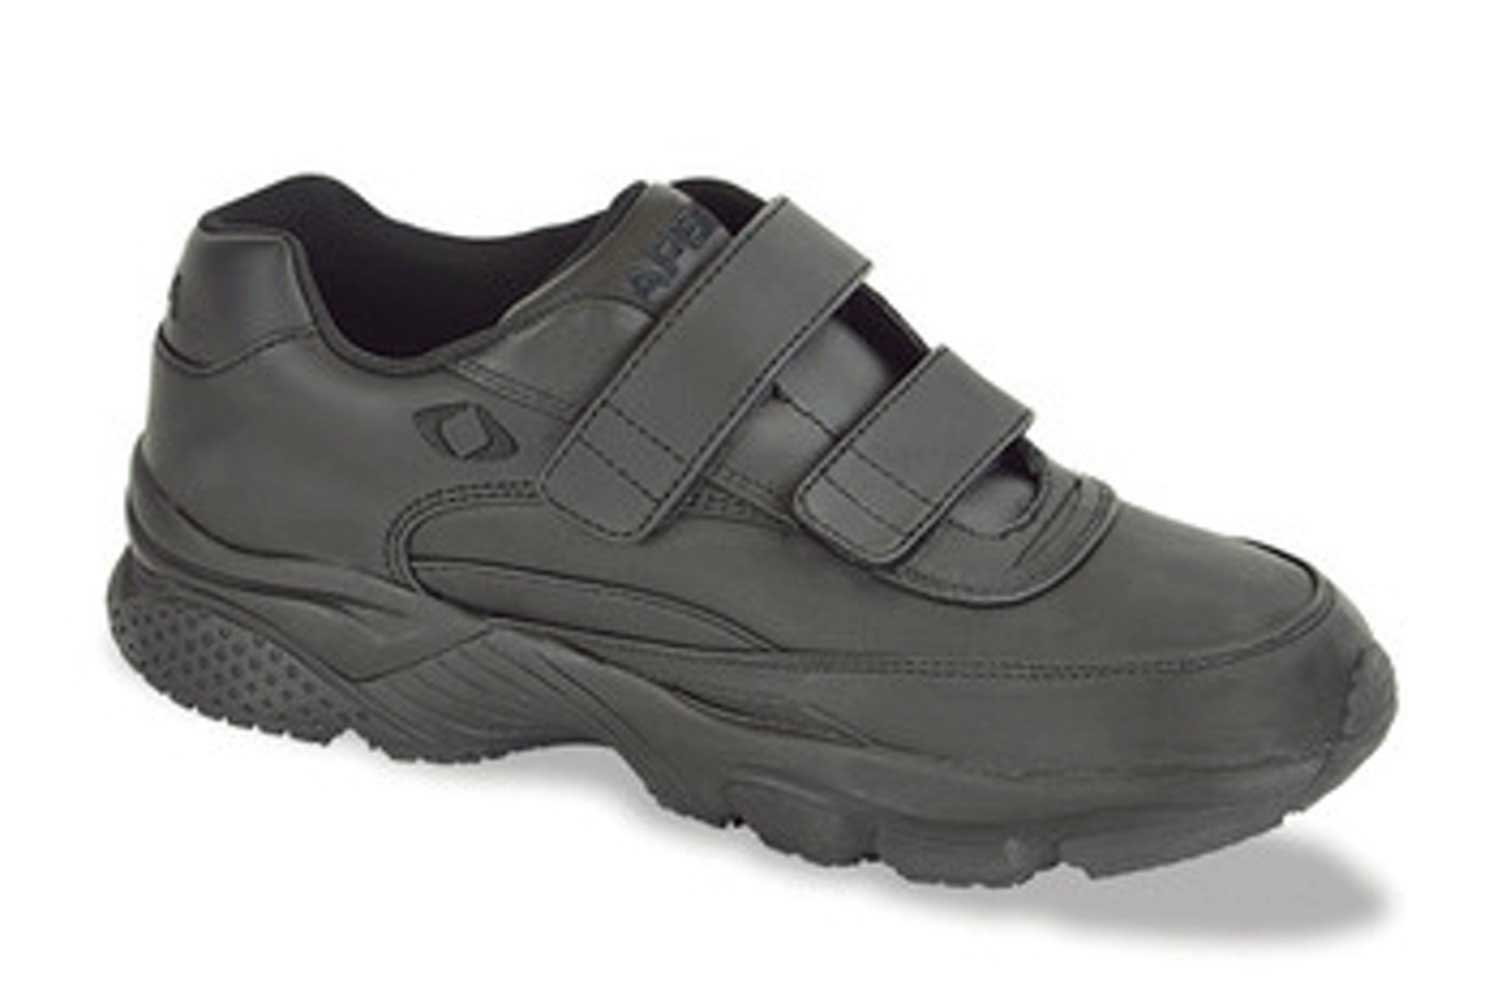 Apex Shoes X920M Walker Athletic Shoe - Men's Comfort Therapeutic Diabetic  Shoe - Medium - Extra Wide - Extra Depth for Orthotics